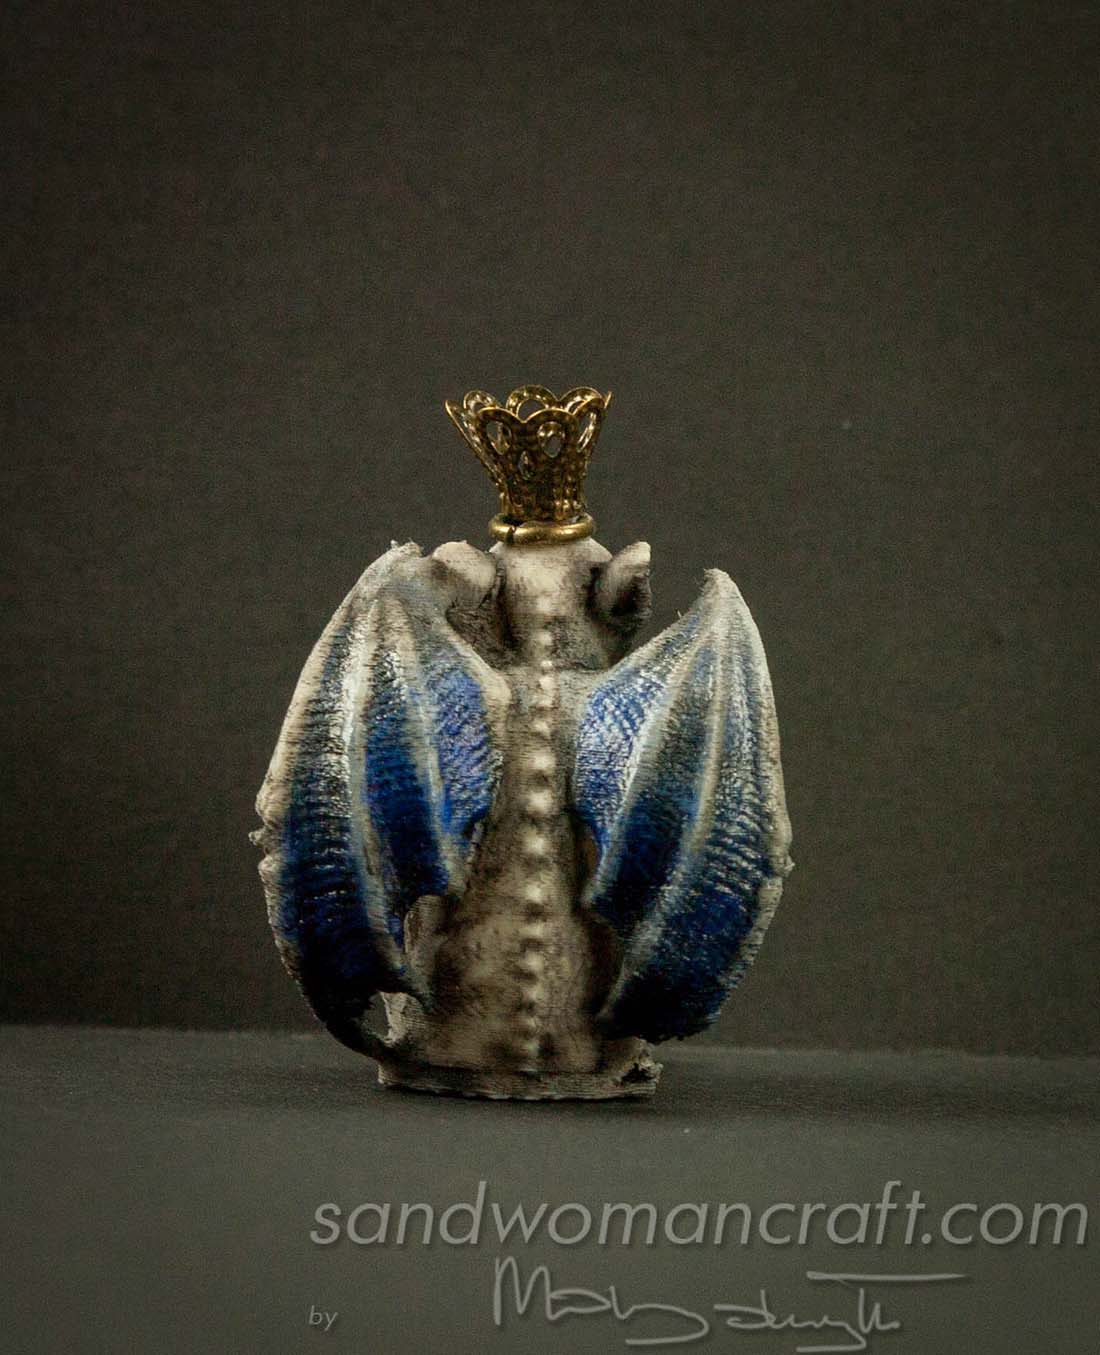 Miniature Gargoyle figurine with blue wings